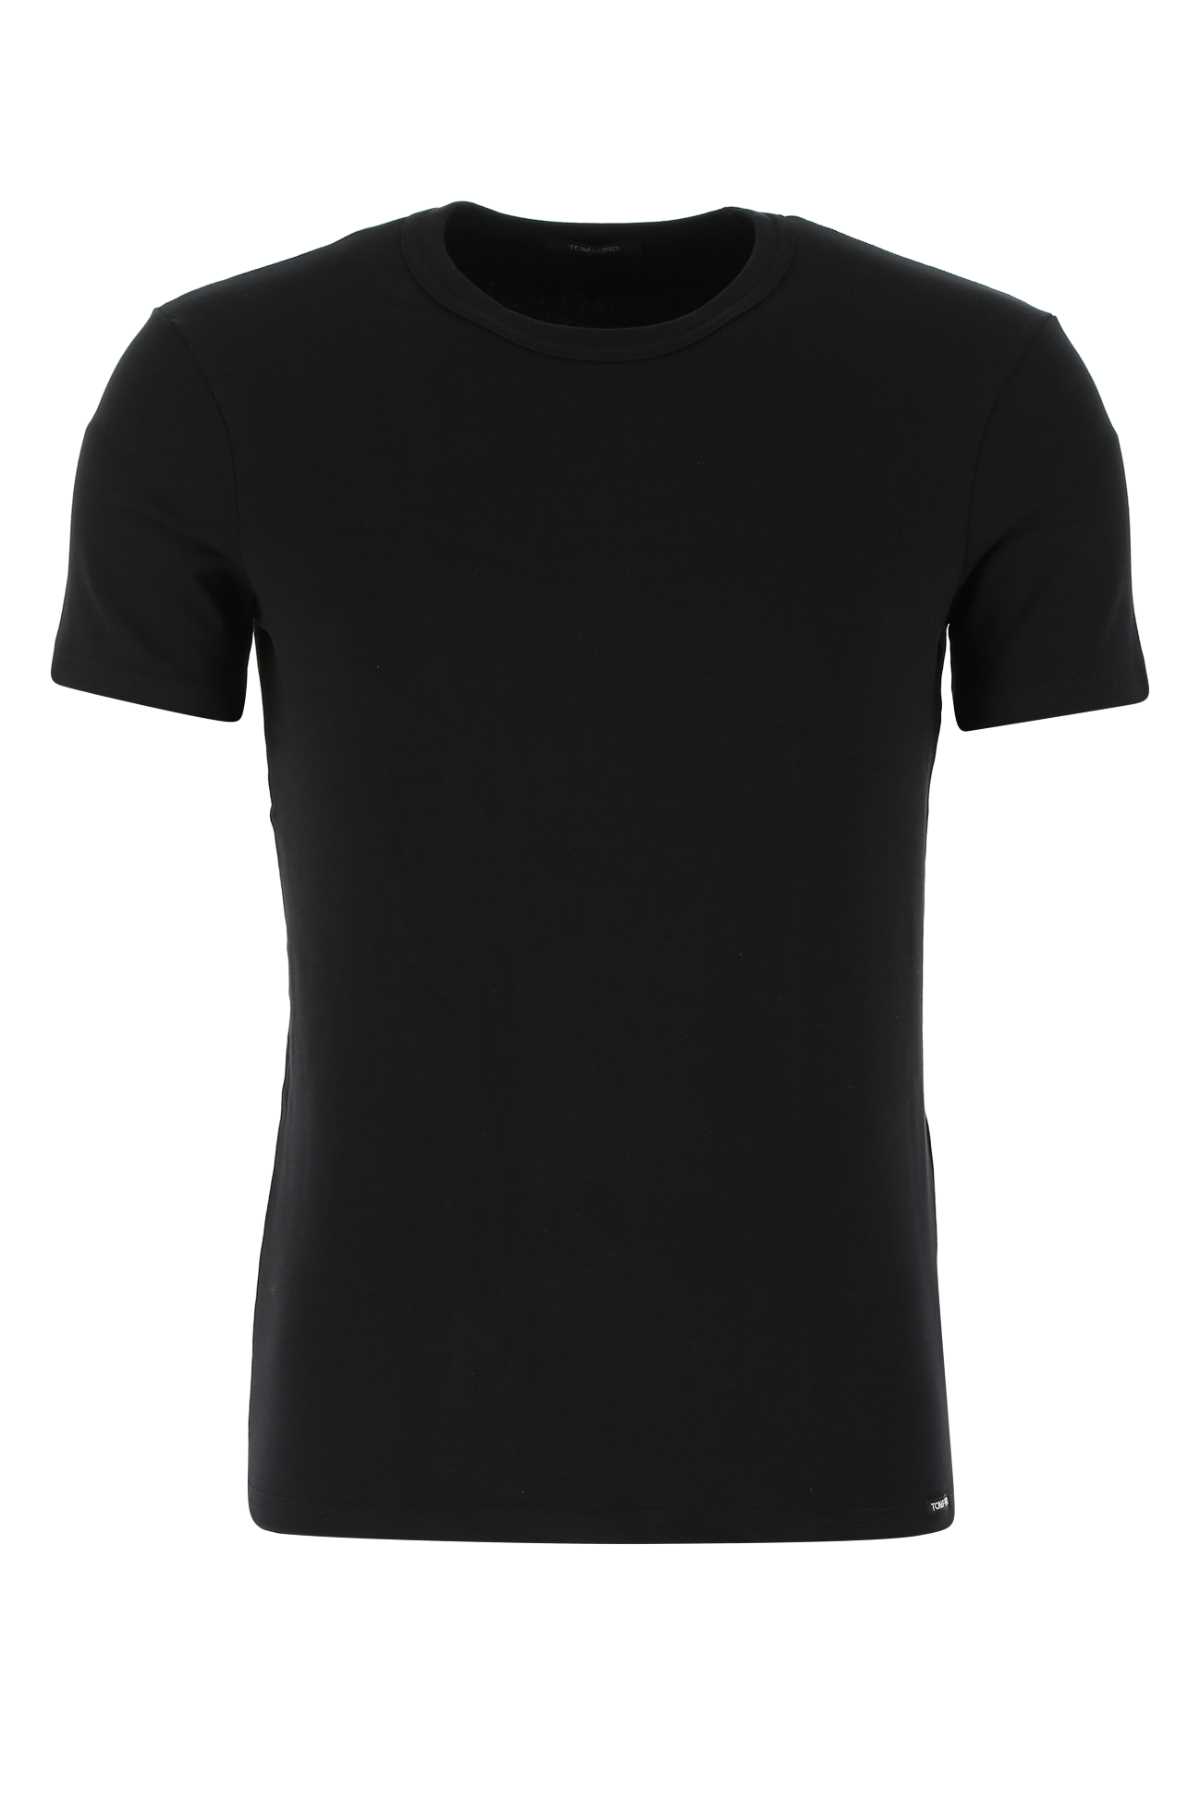 Shop Tom Ford Black Stretch Cotton T-shirt